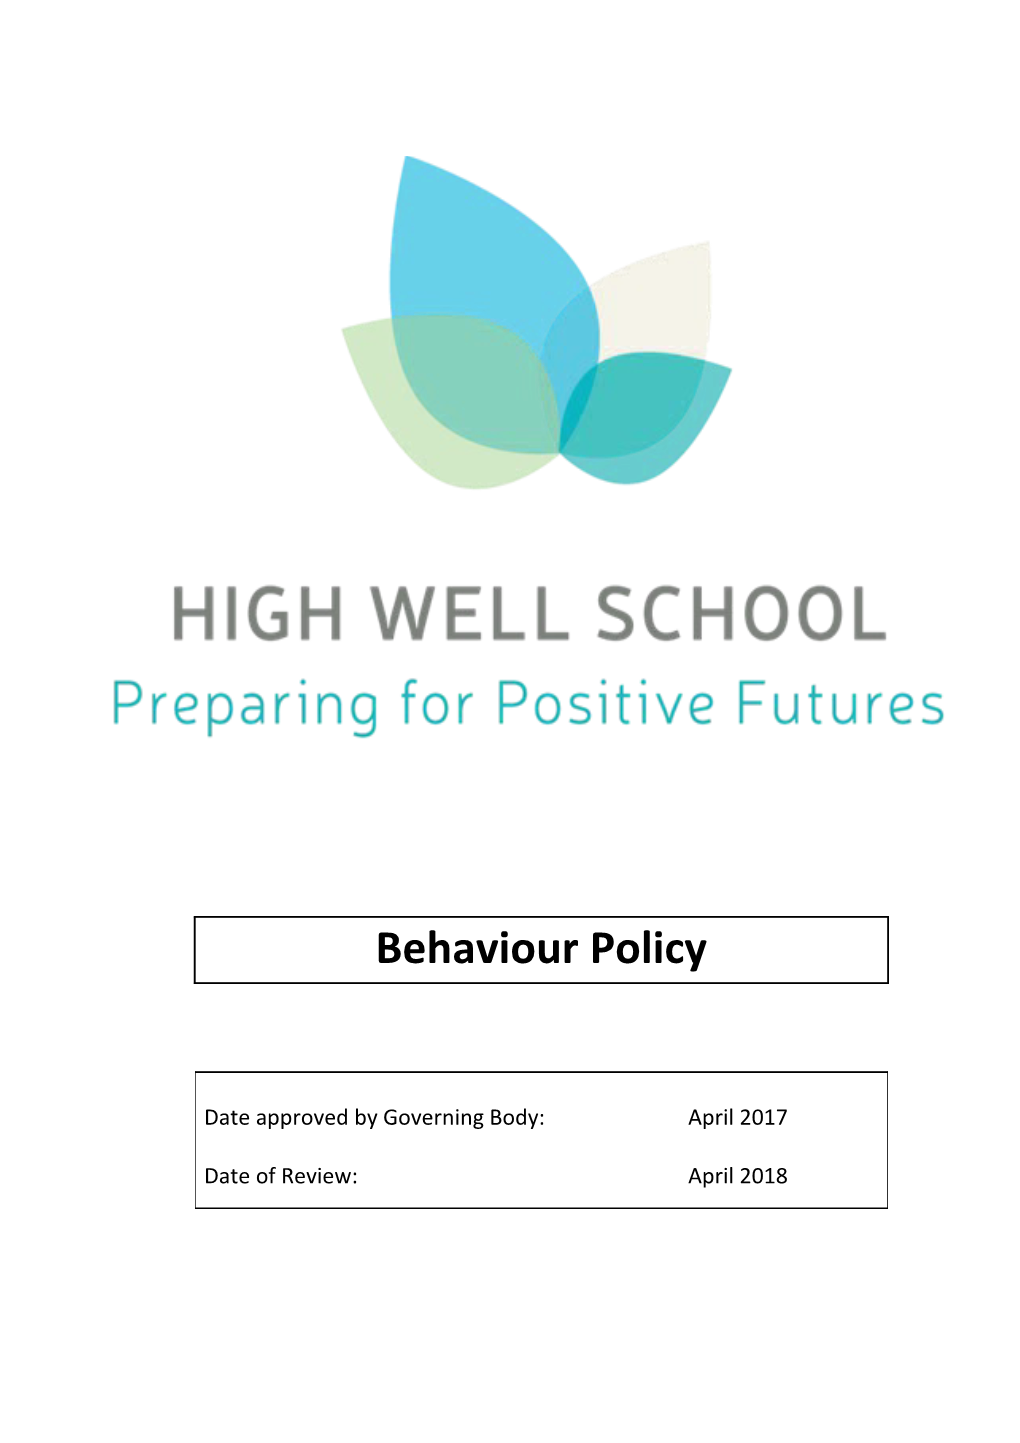 High Well School Behaviour Policy